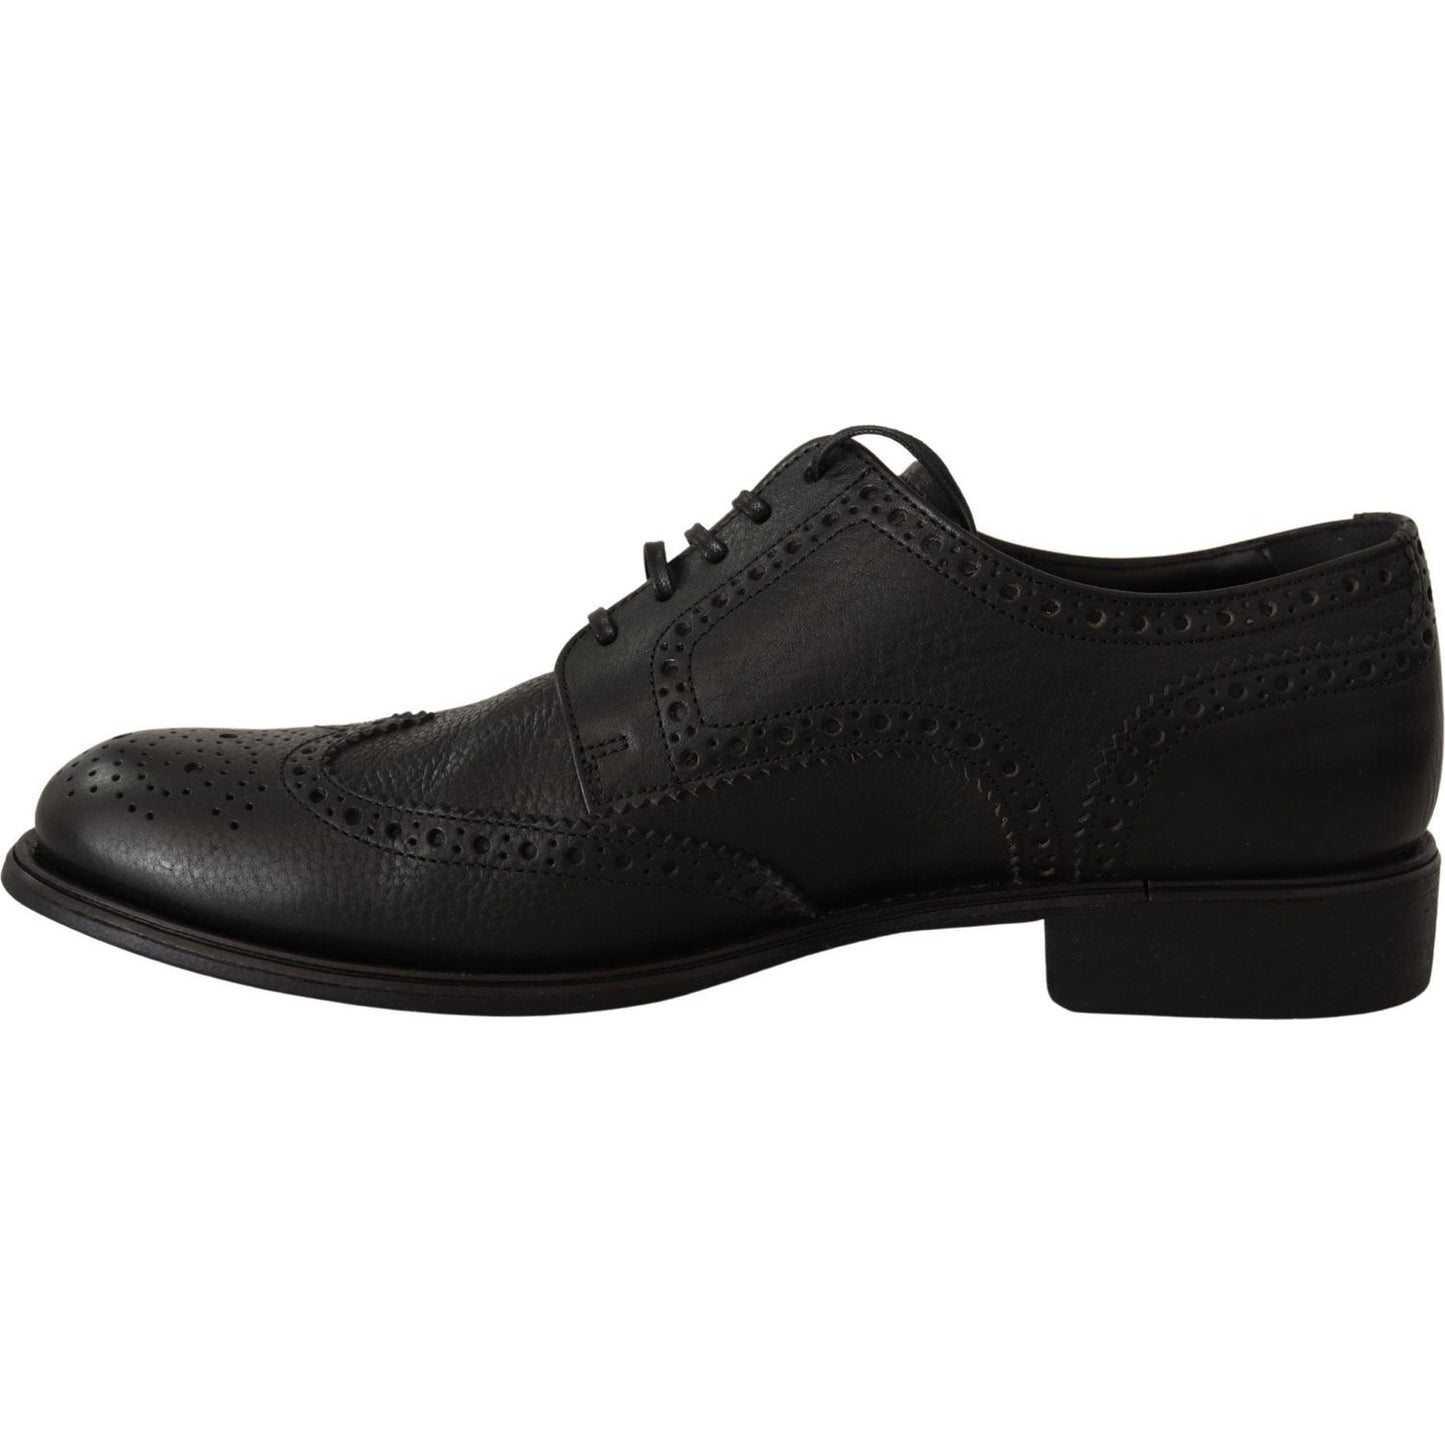 Dolce & Gabbana Elegant Black Leather Derby Wingtip Shoes black-leather-oxford-wingtip-formal-dress-shoes-1 IMG_4907-scaled-19473d51-e02.jpg